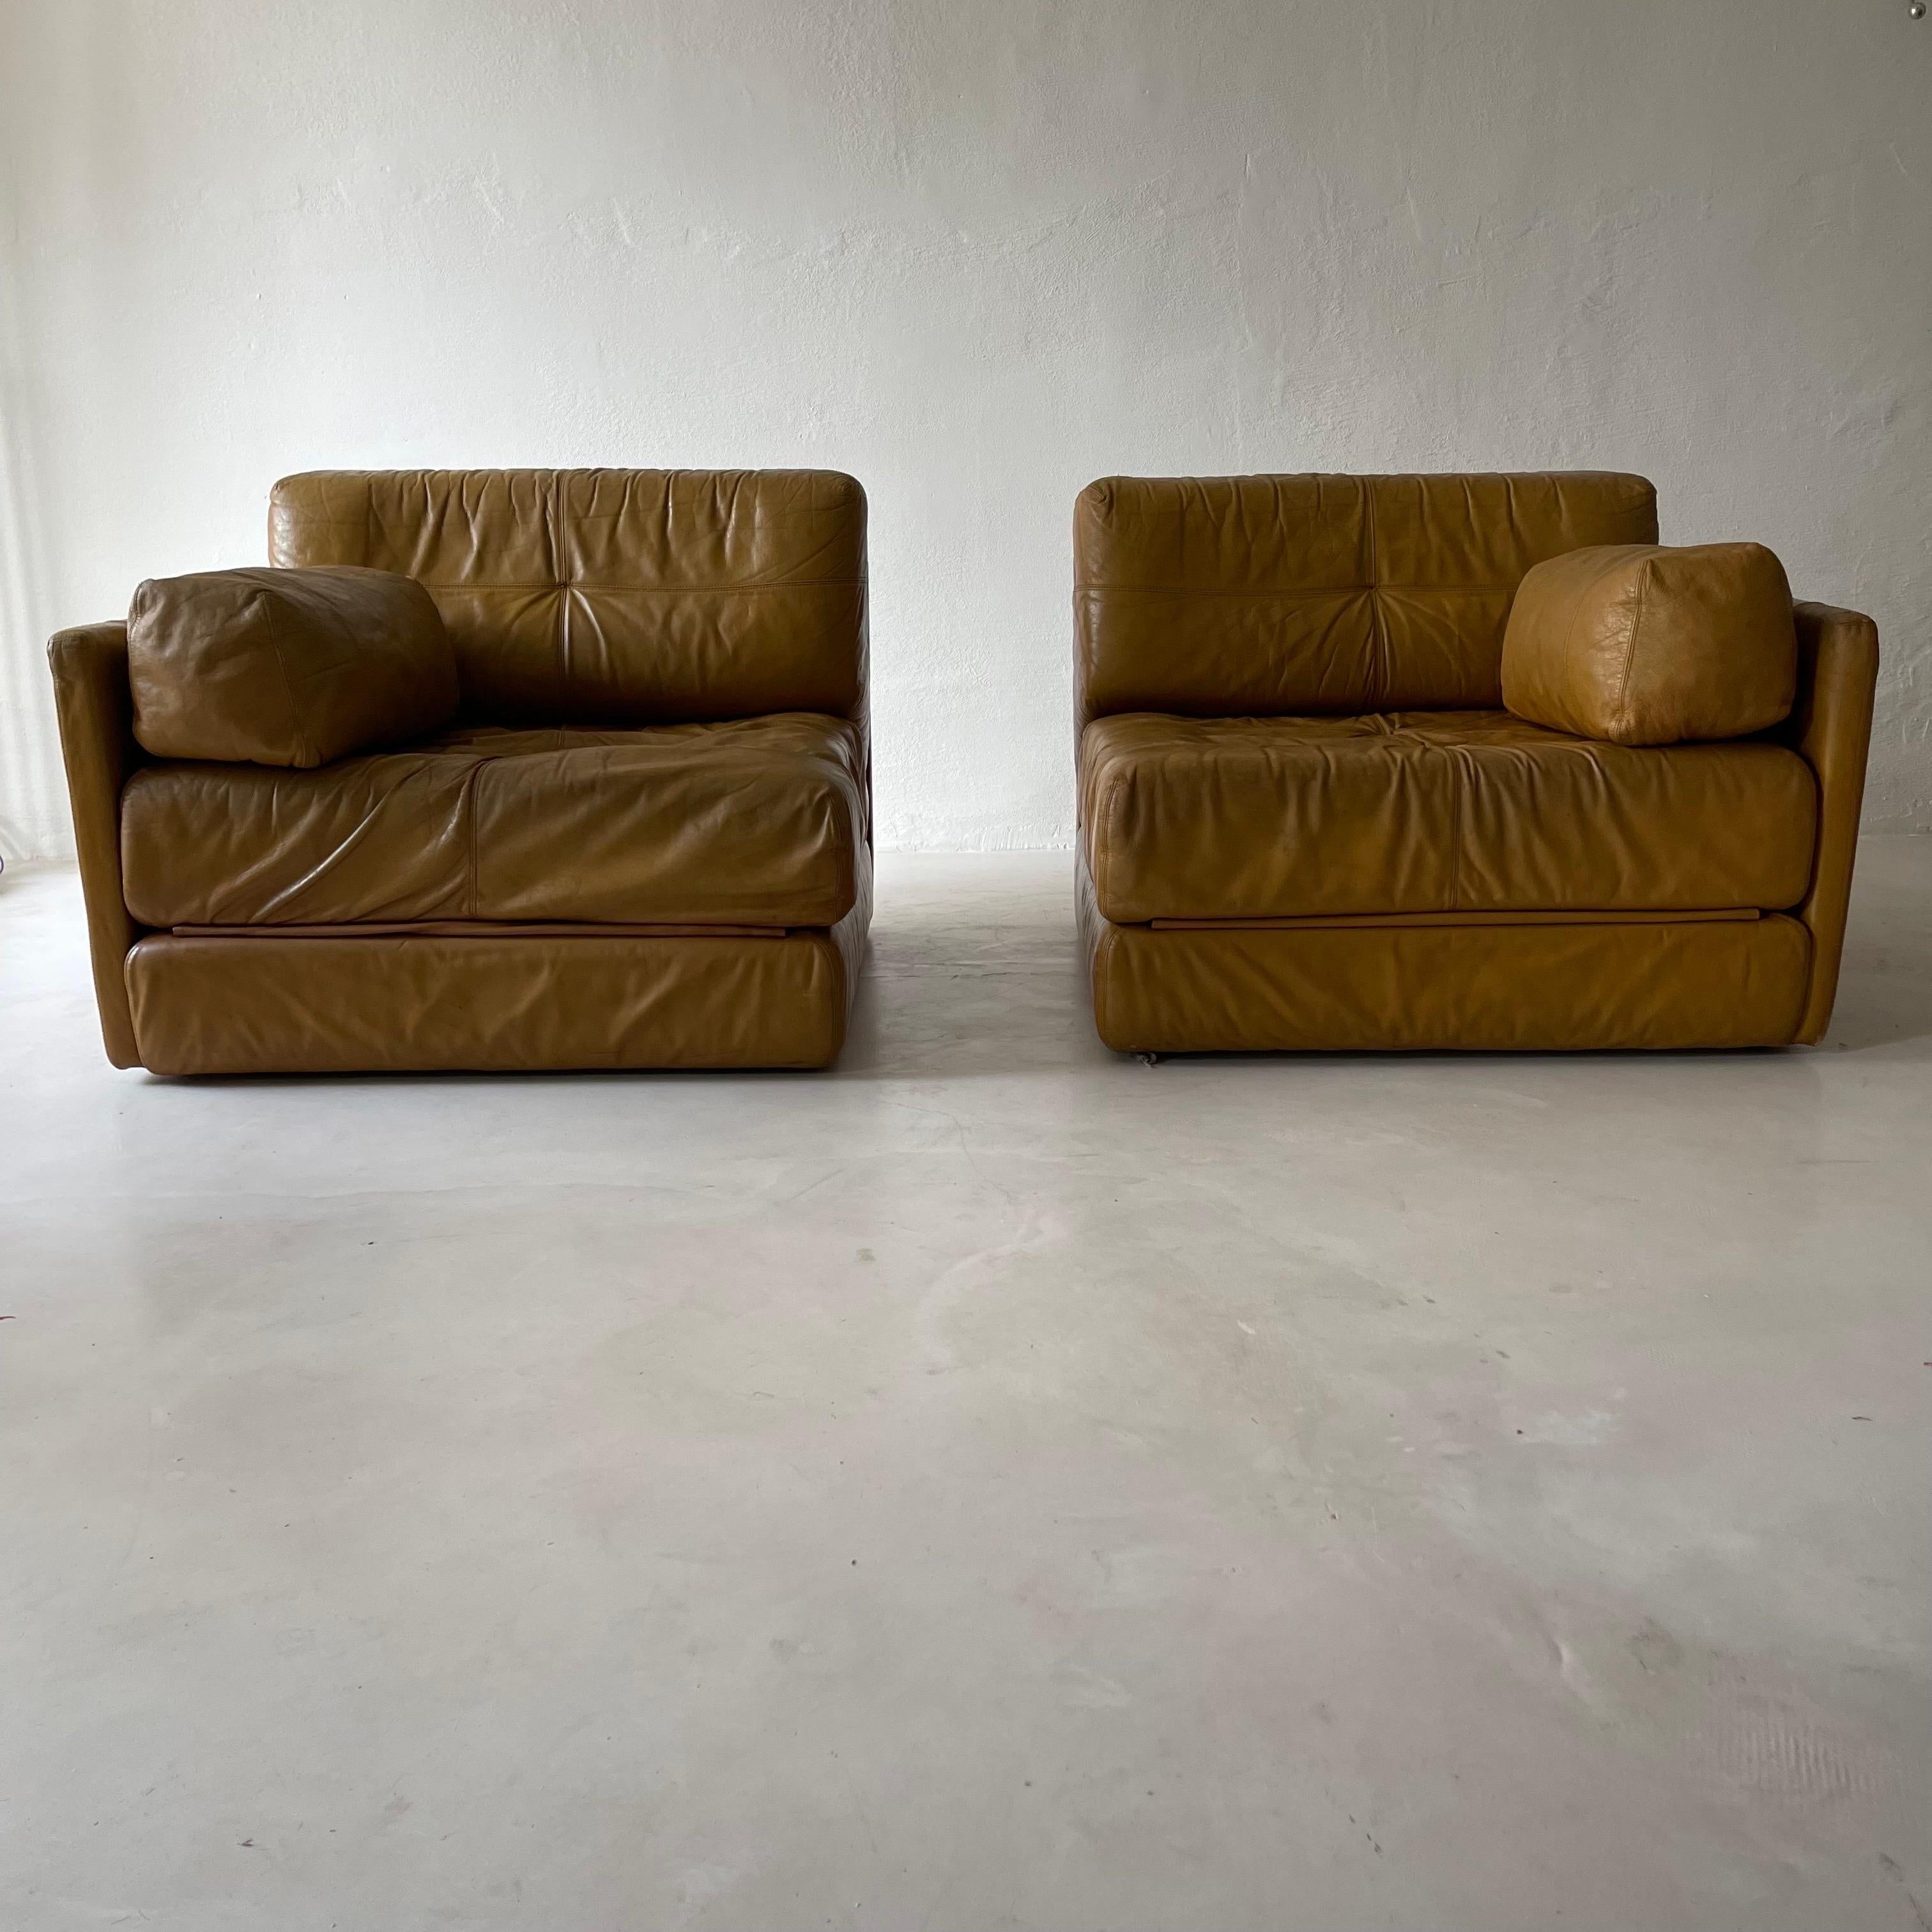 Wittmann Model 'Atrium' cognac leather pair lounge chairs, Austria 1970s.